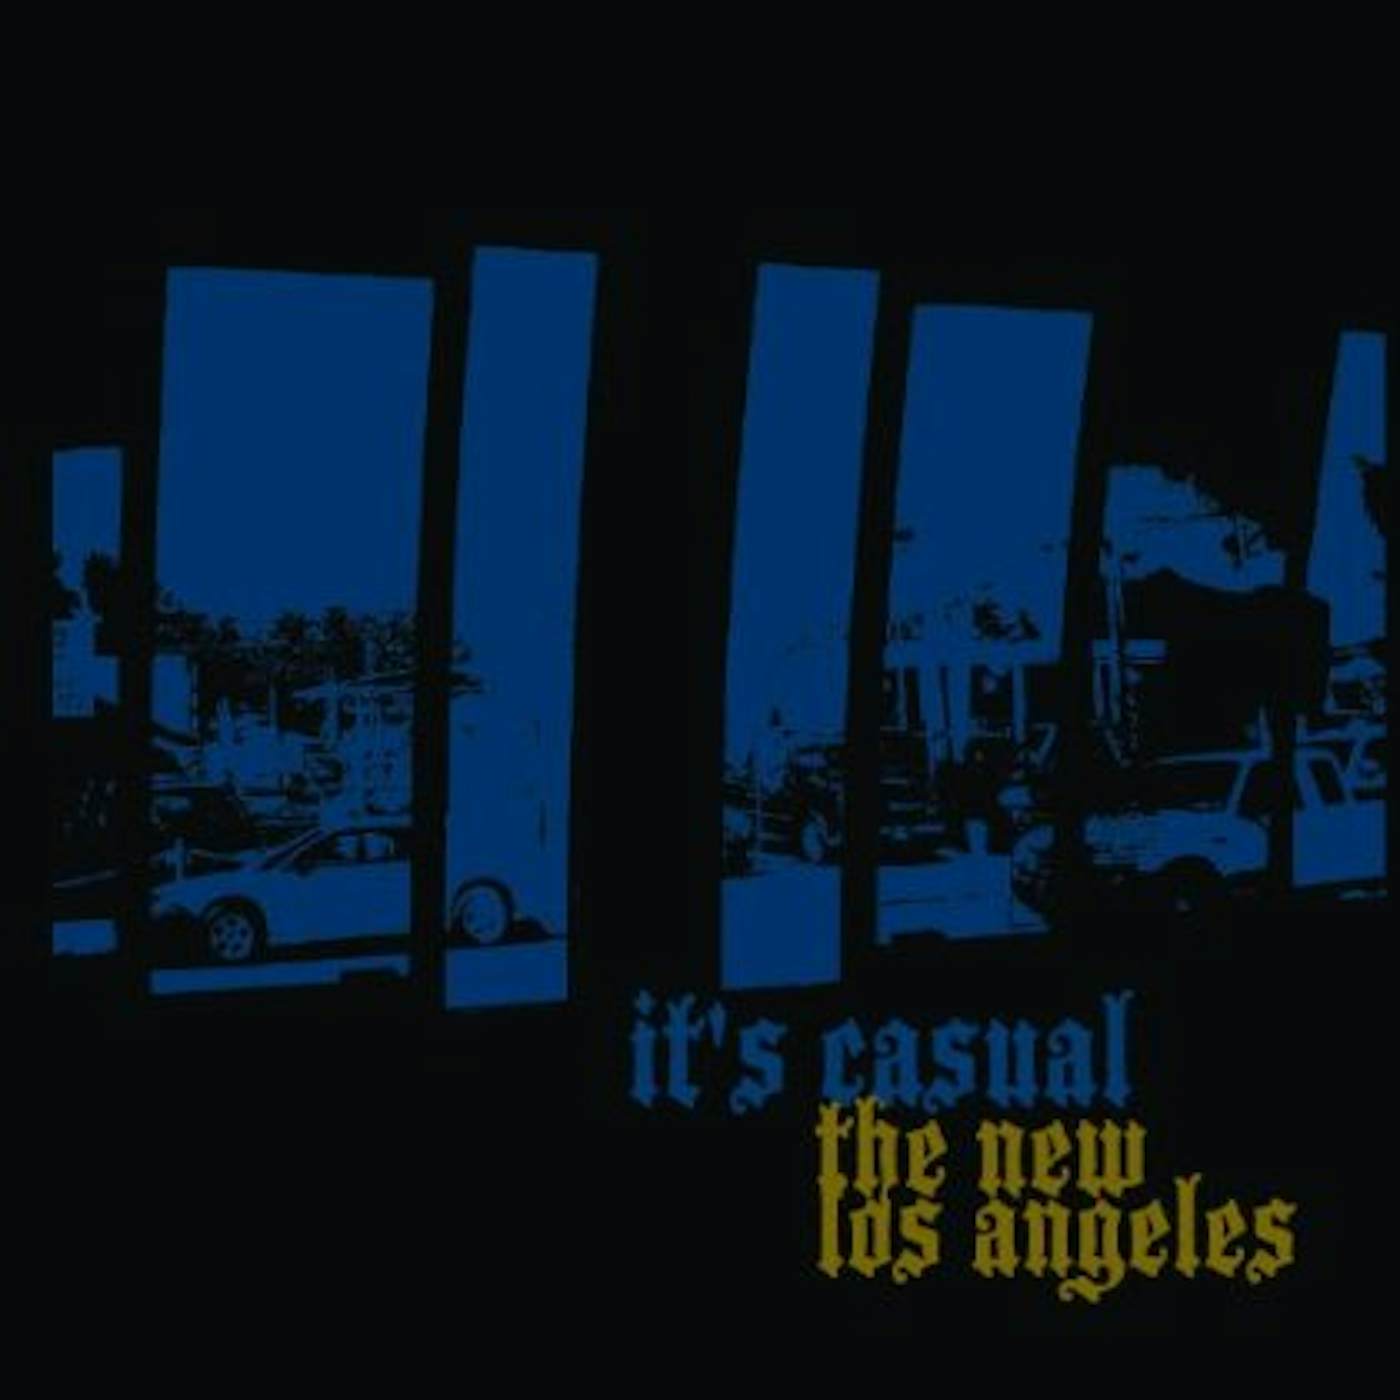 It's Casual NEW LOS ANGELES Vinyl Record